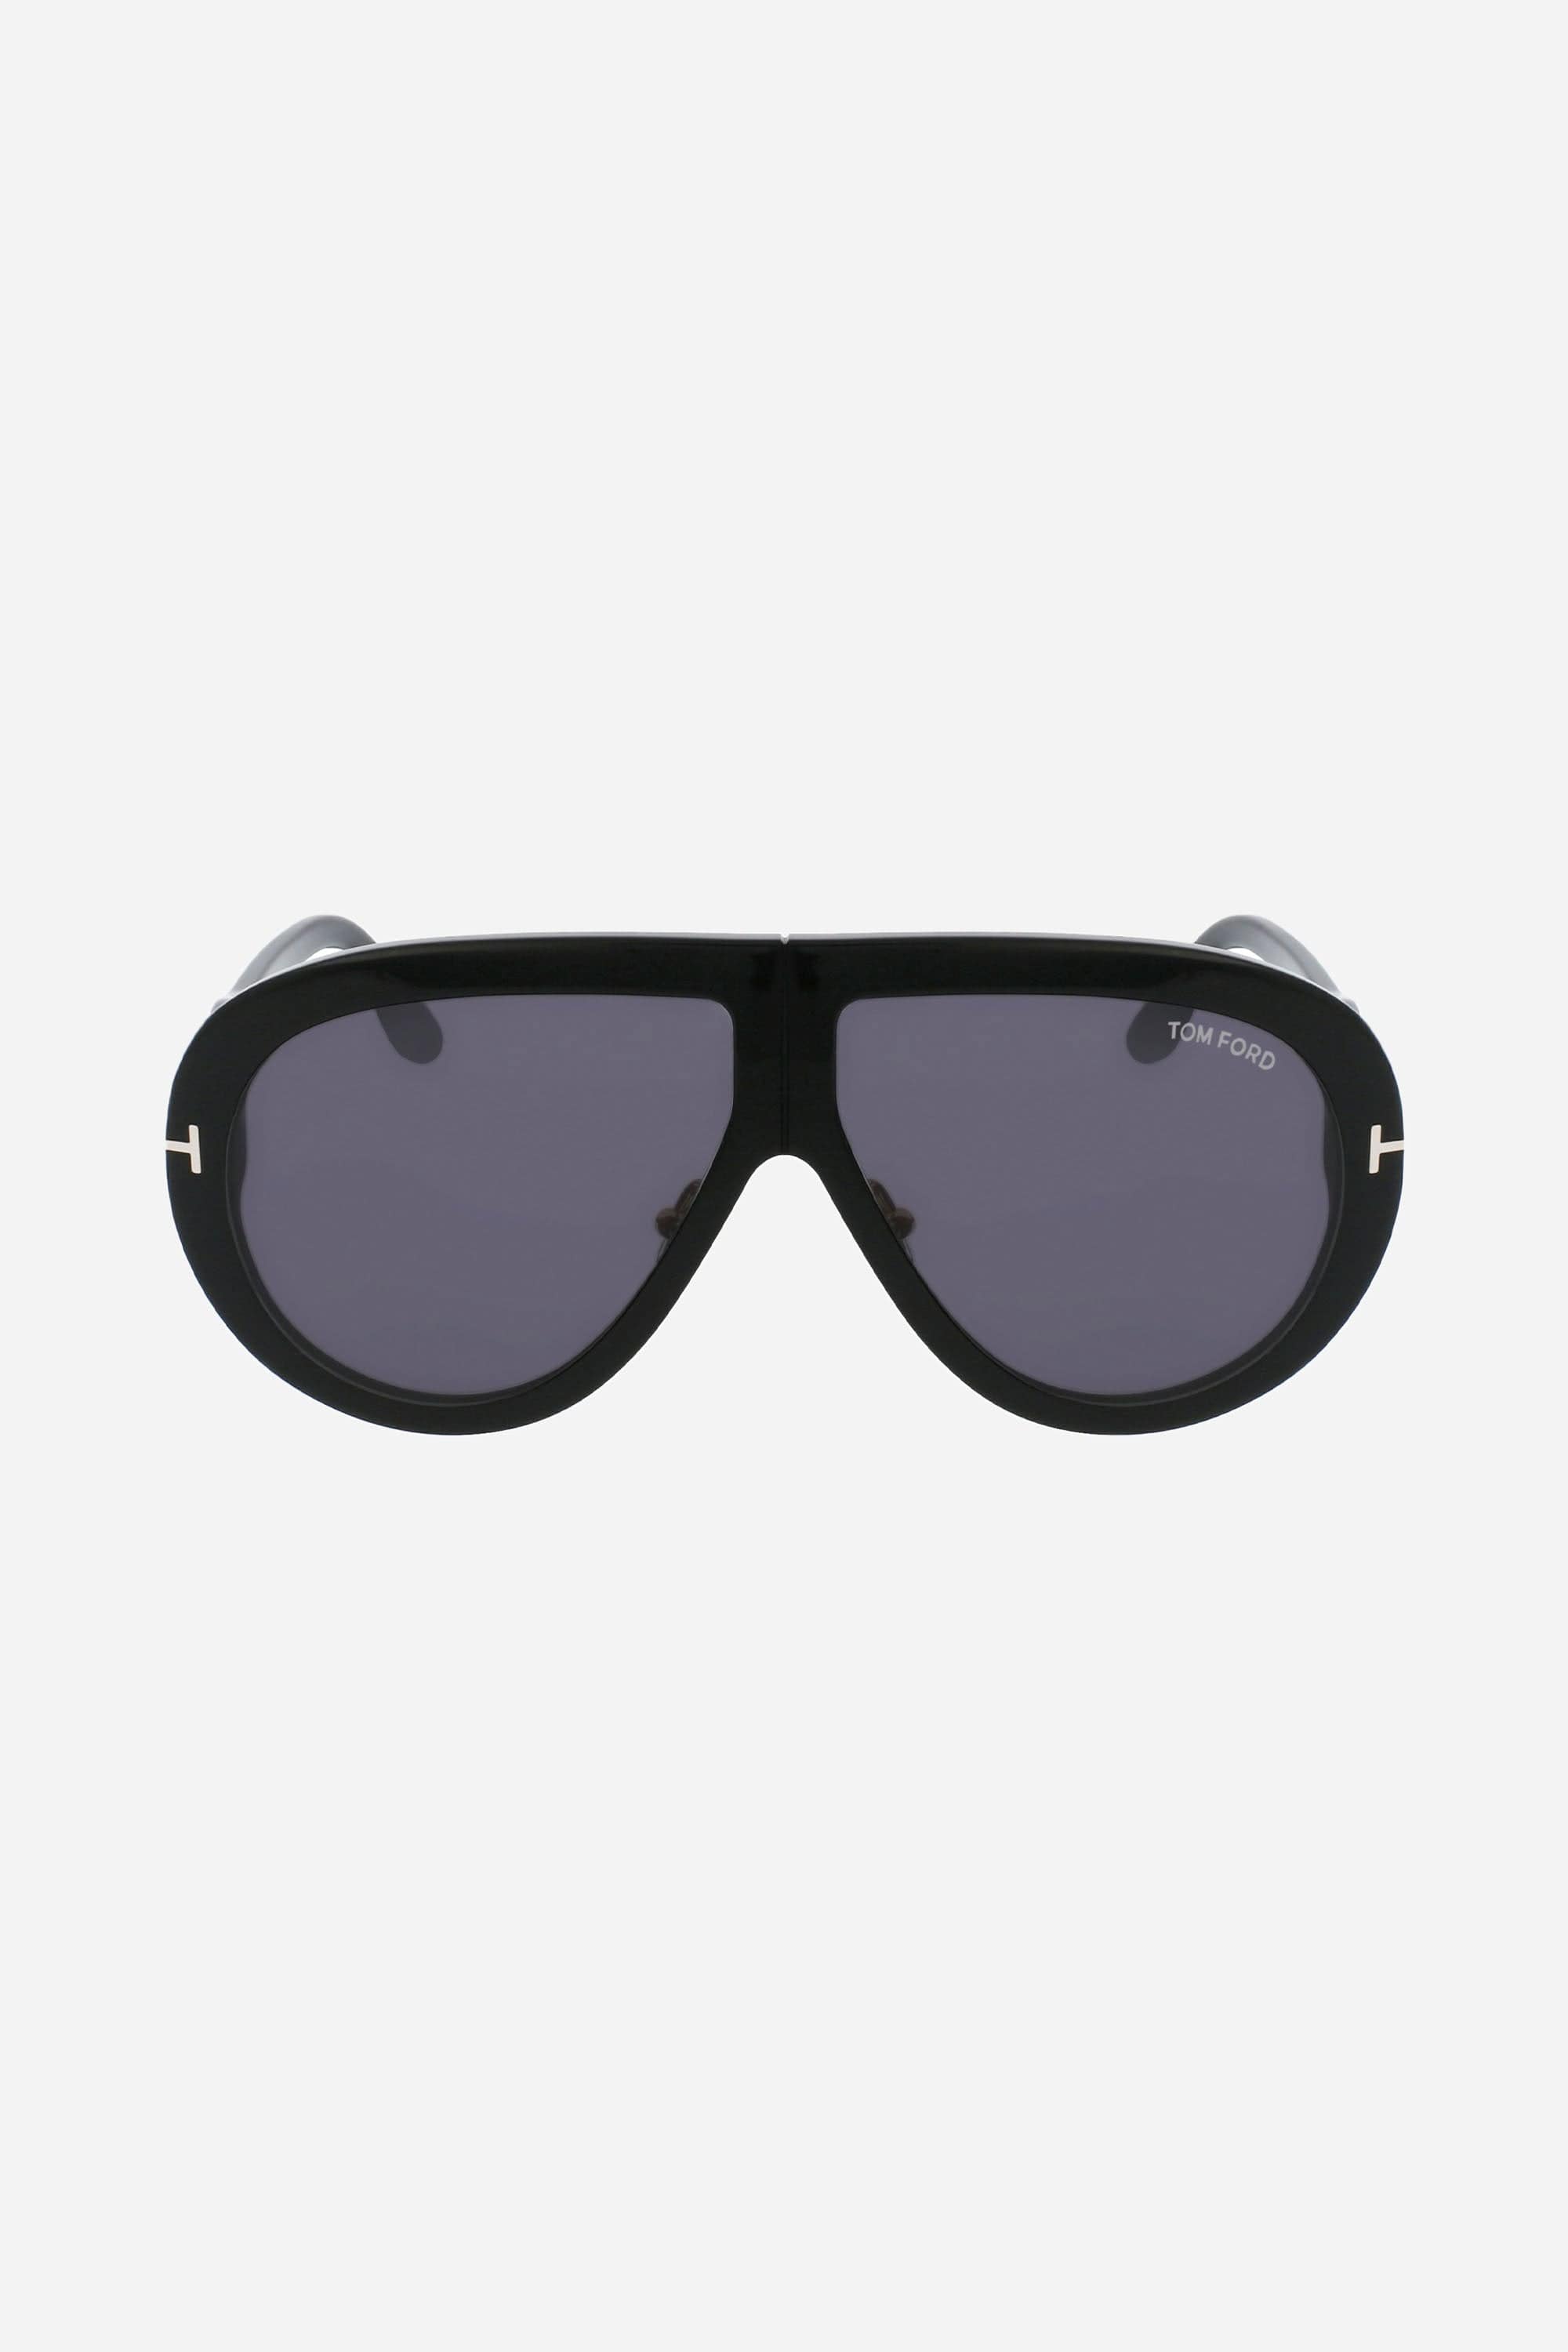 Tom Ford oversized pilot black sunglasses - Eyewear Club